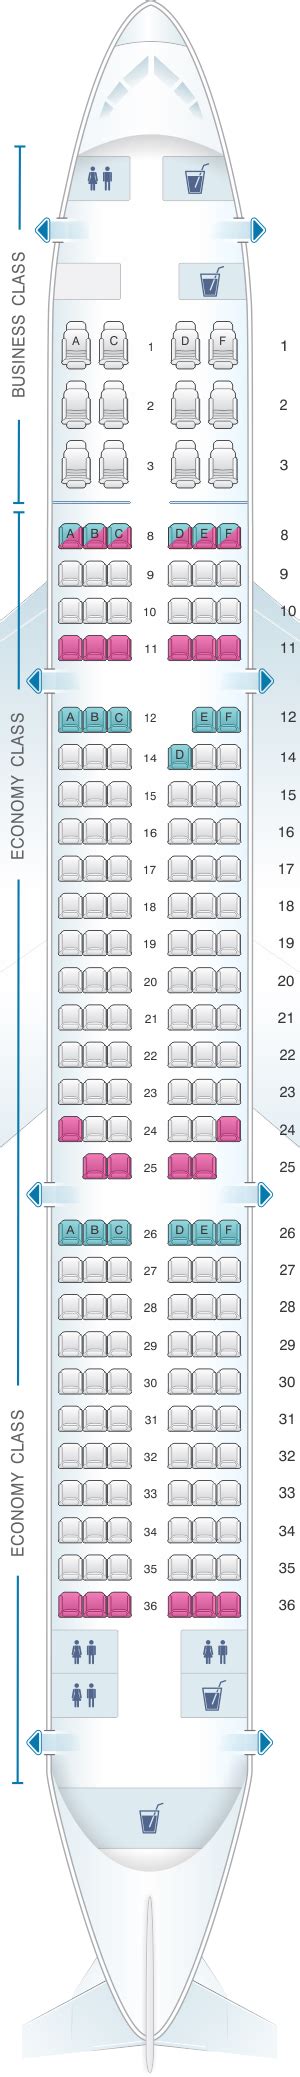 Seat Map Qatar Airways Airbus A321 200 177pax Seatmaestro